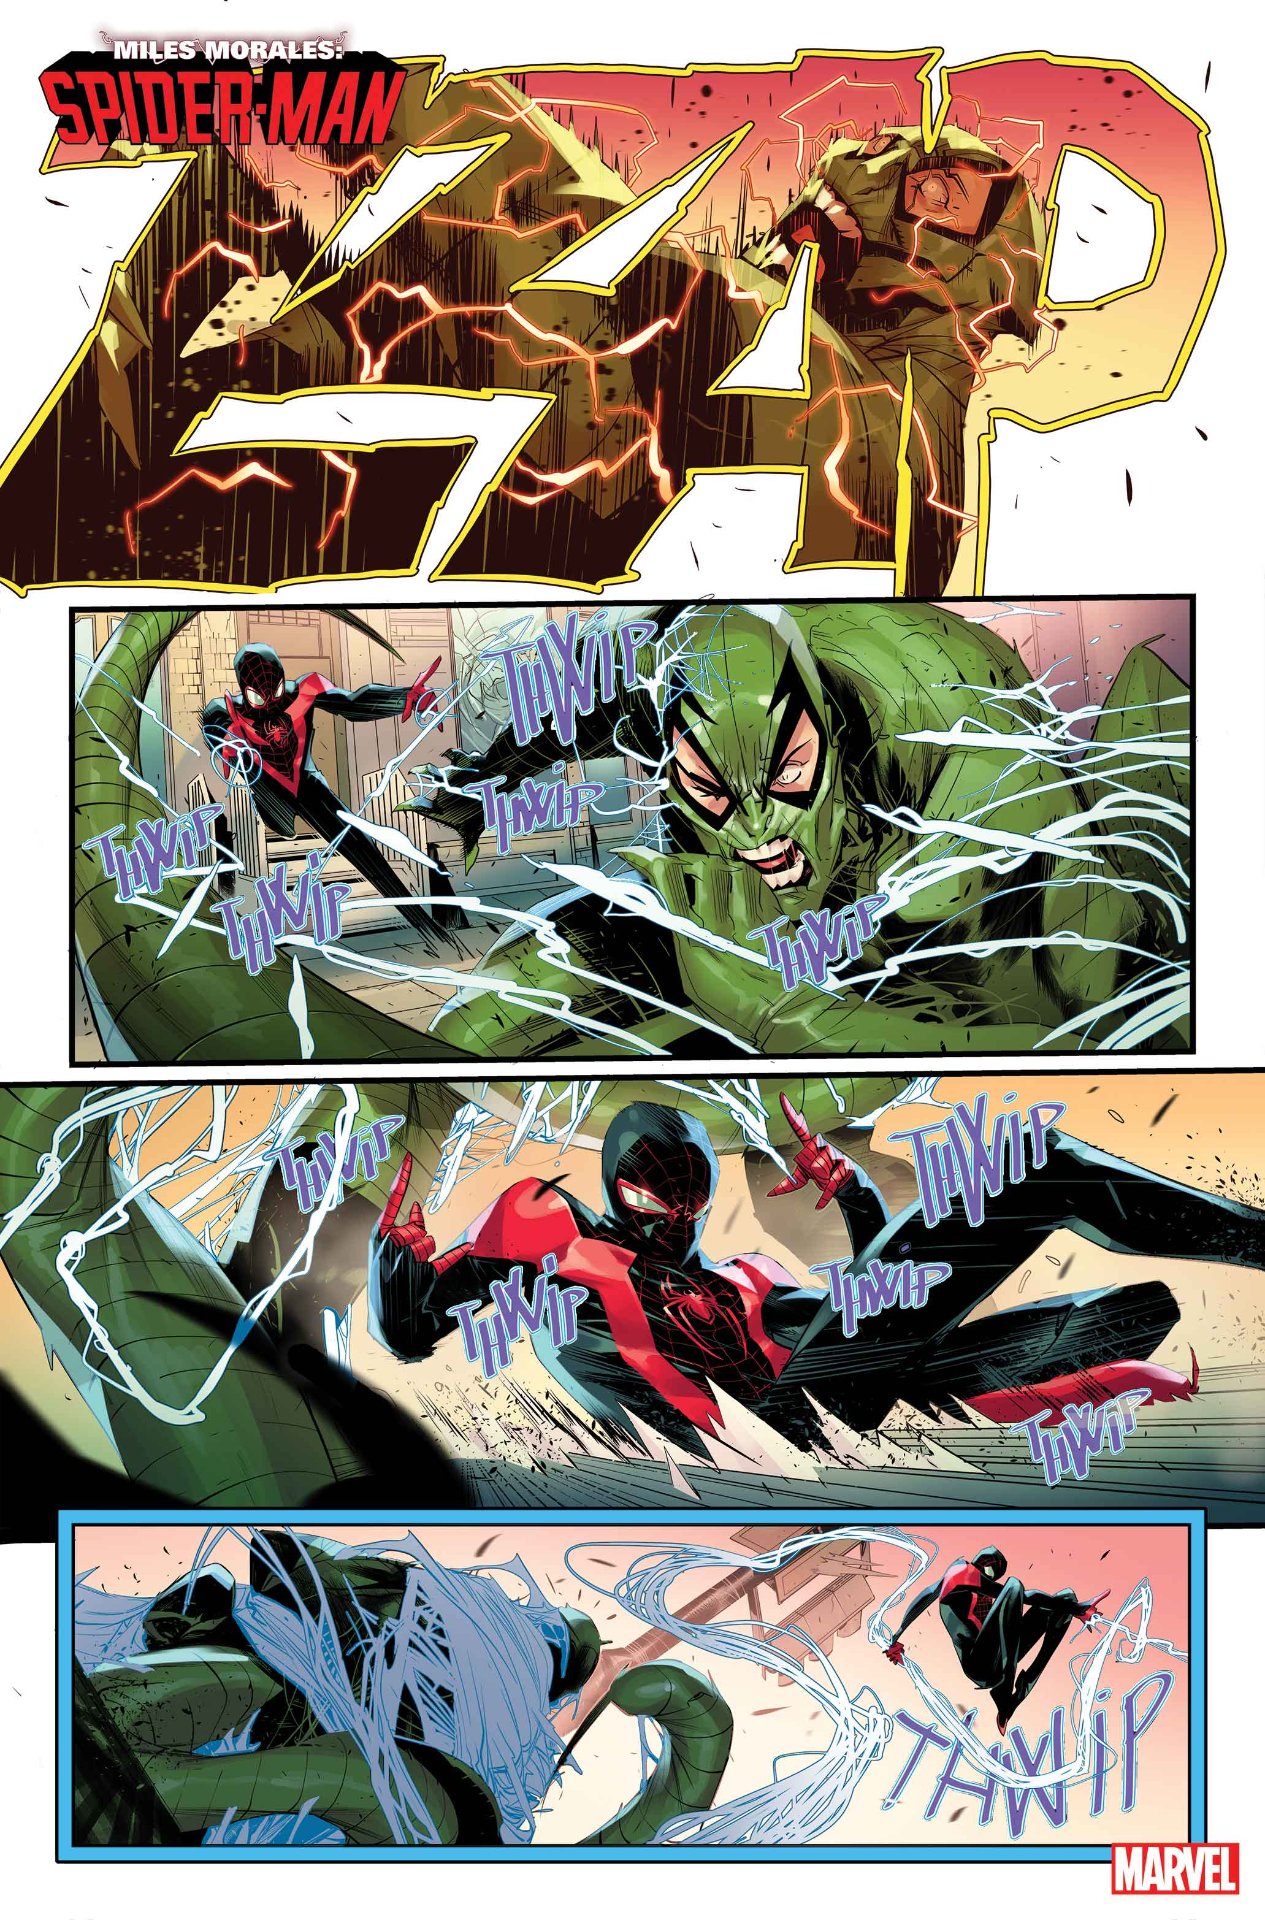 Miles Morales: Spider-Man #1